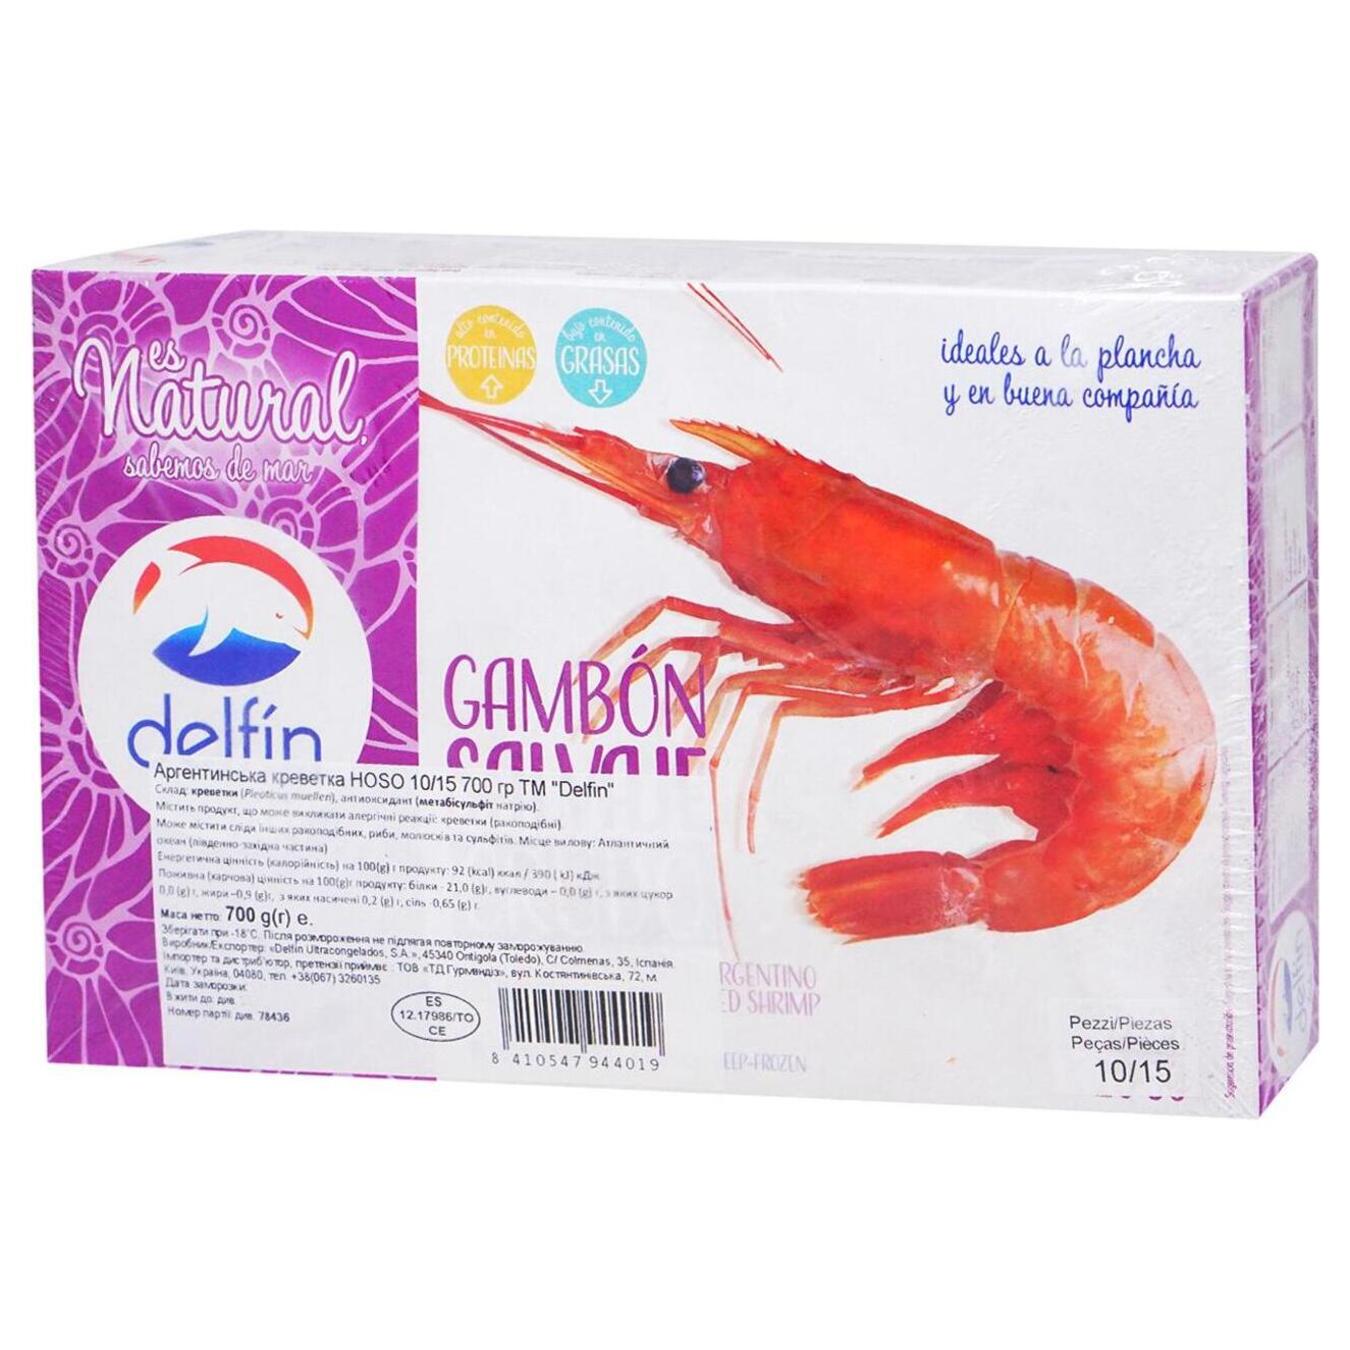 Argentinian shrimp Delfin HOSO 10/15 700g